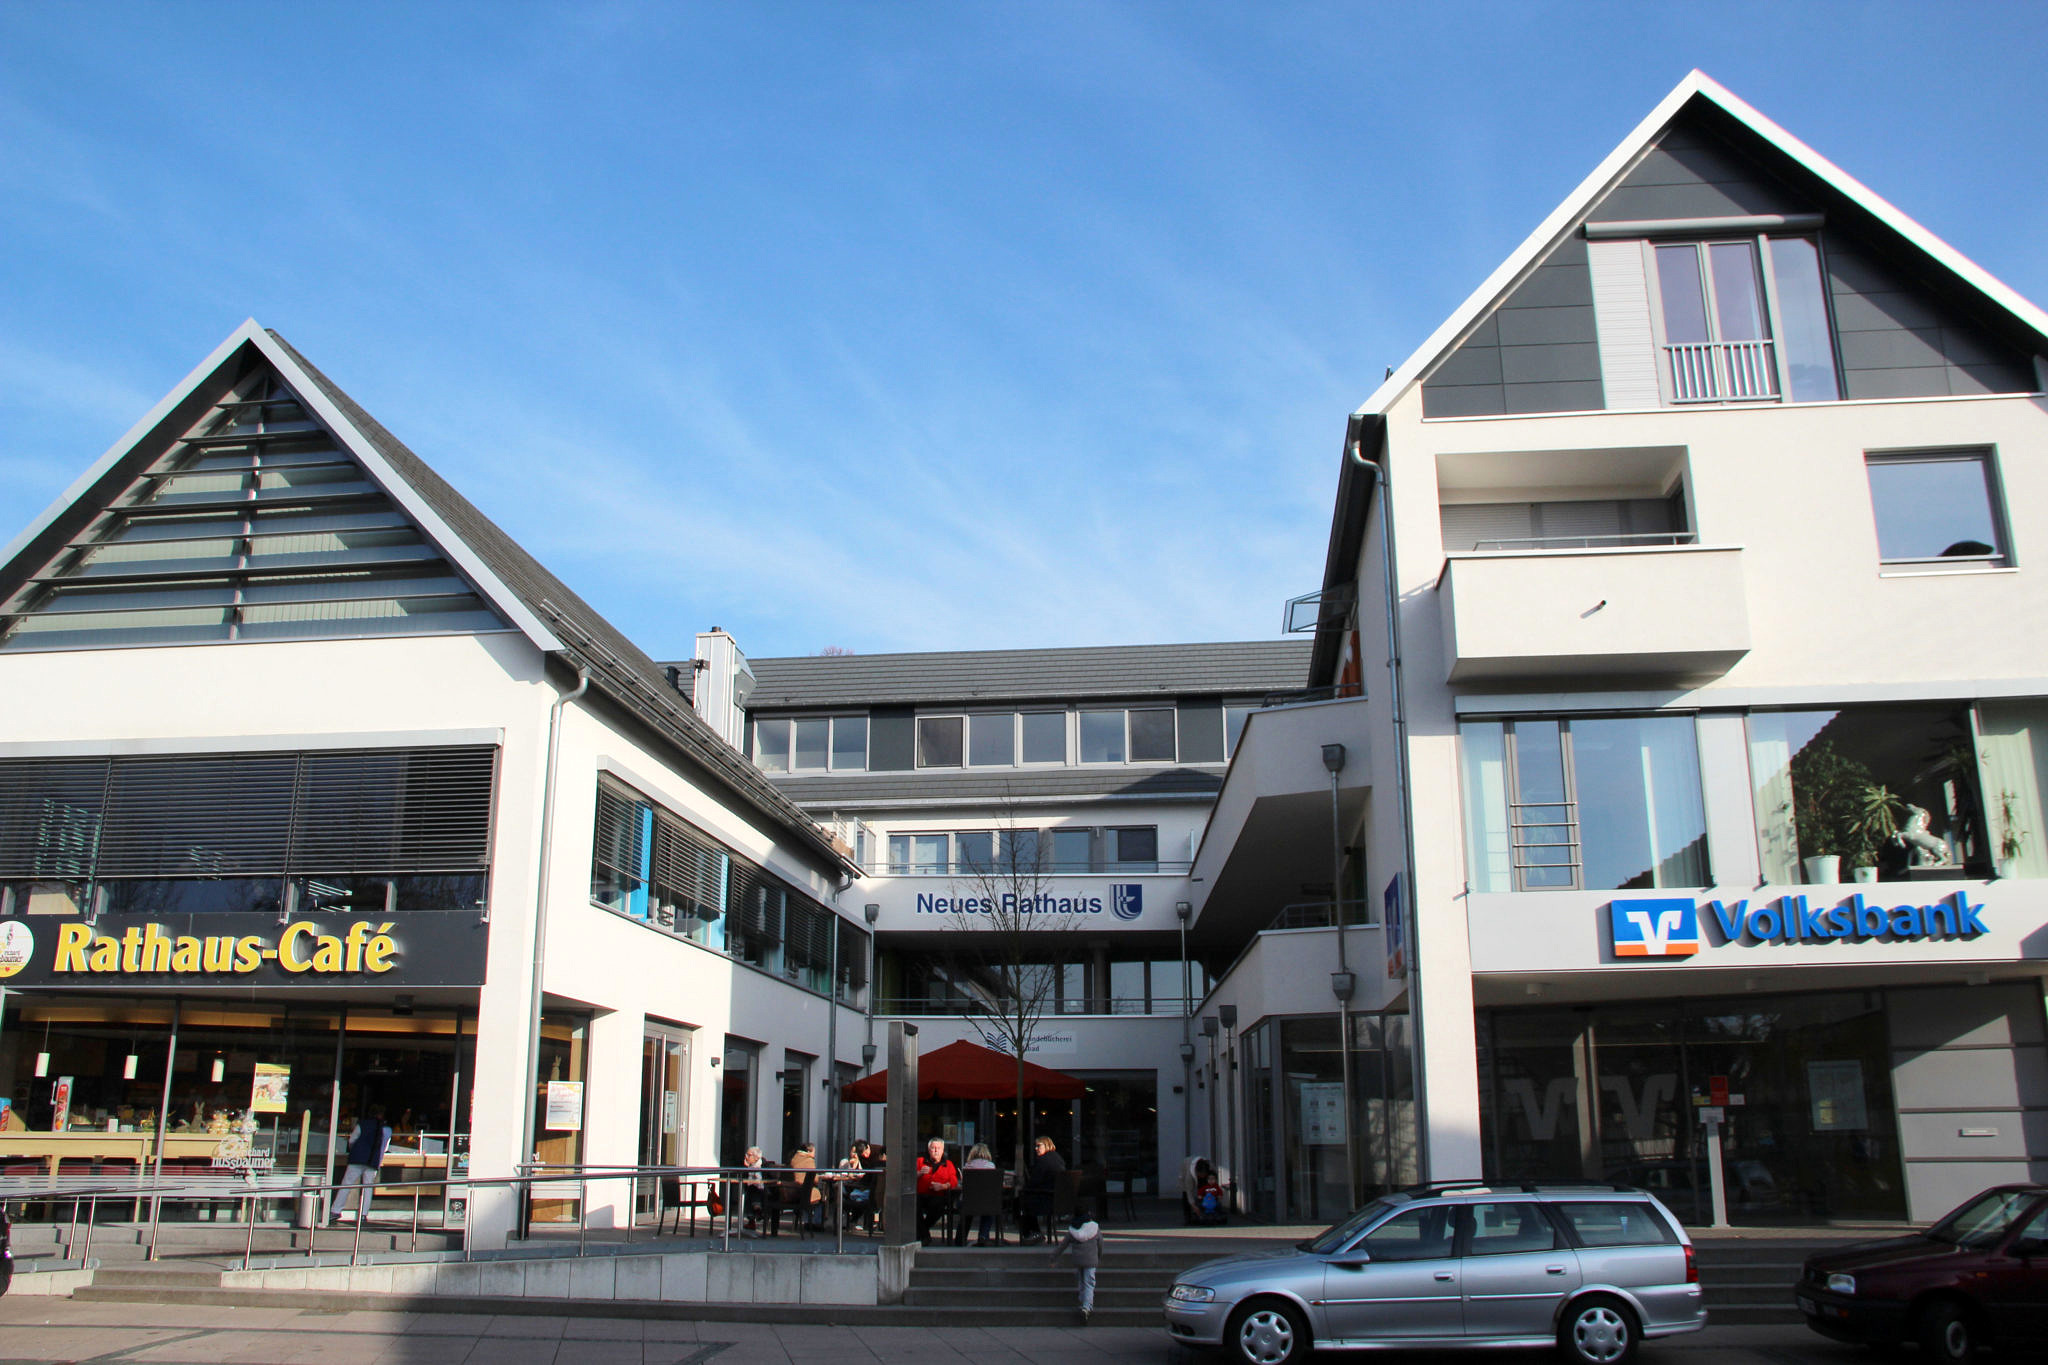 Borough of Karlsbad